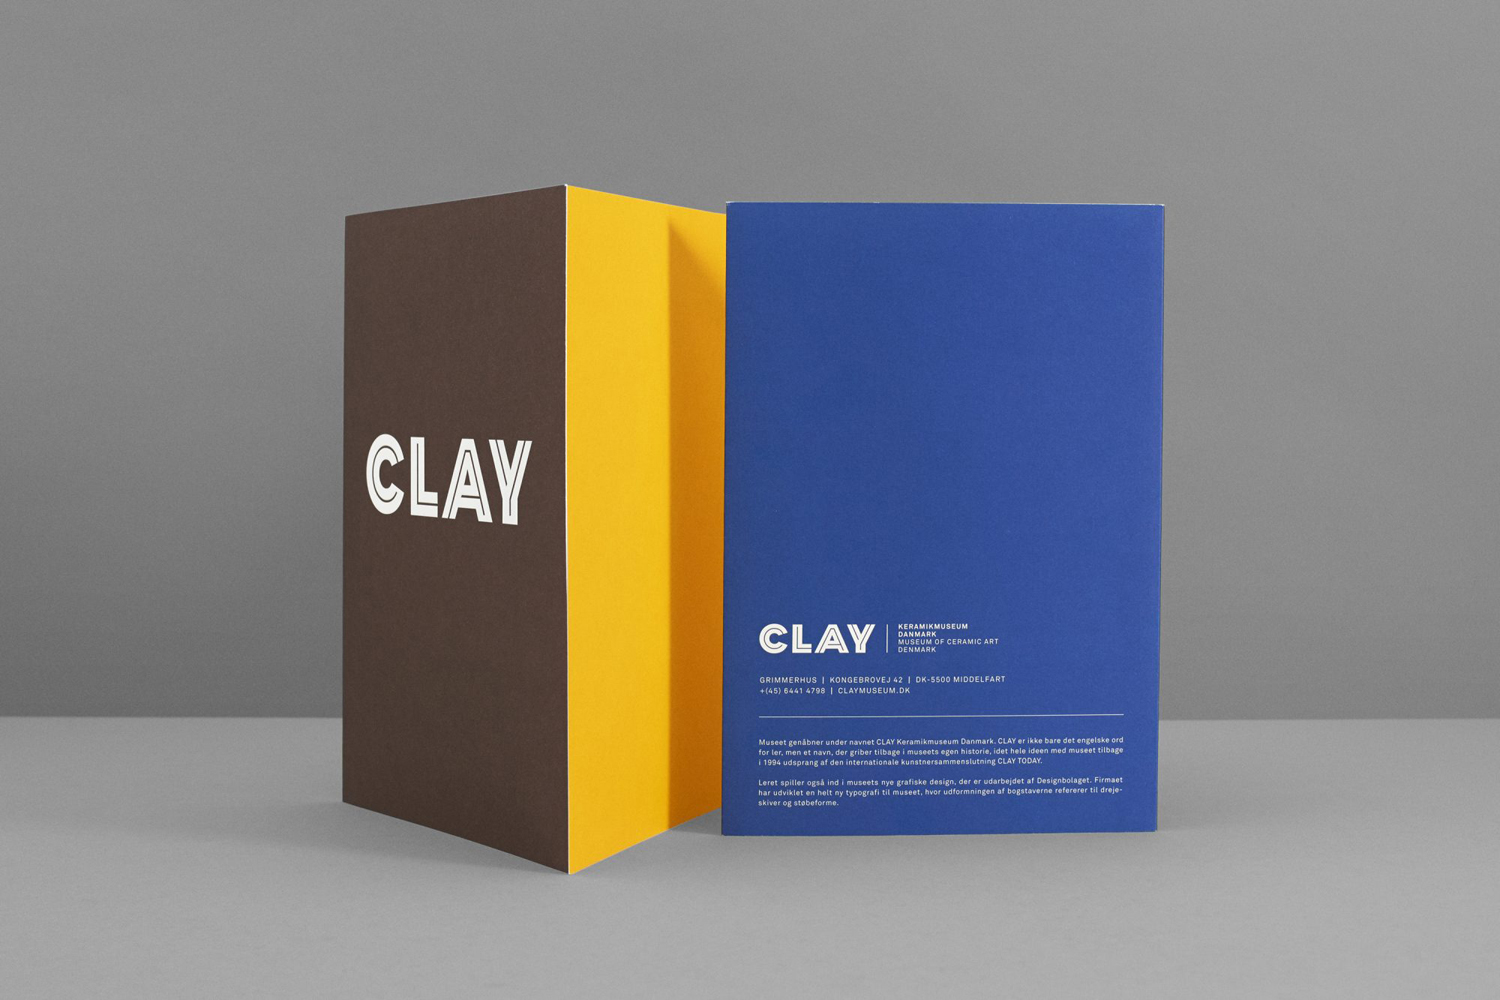 Print for Clay — Museum of Ceramic Art Denmark by Designbolaget